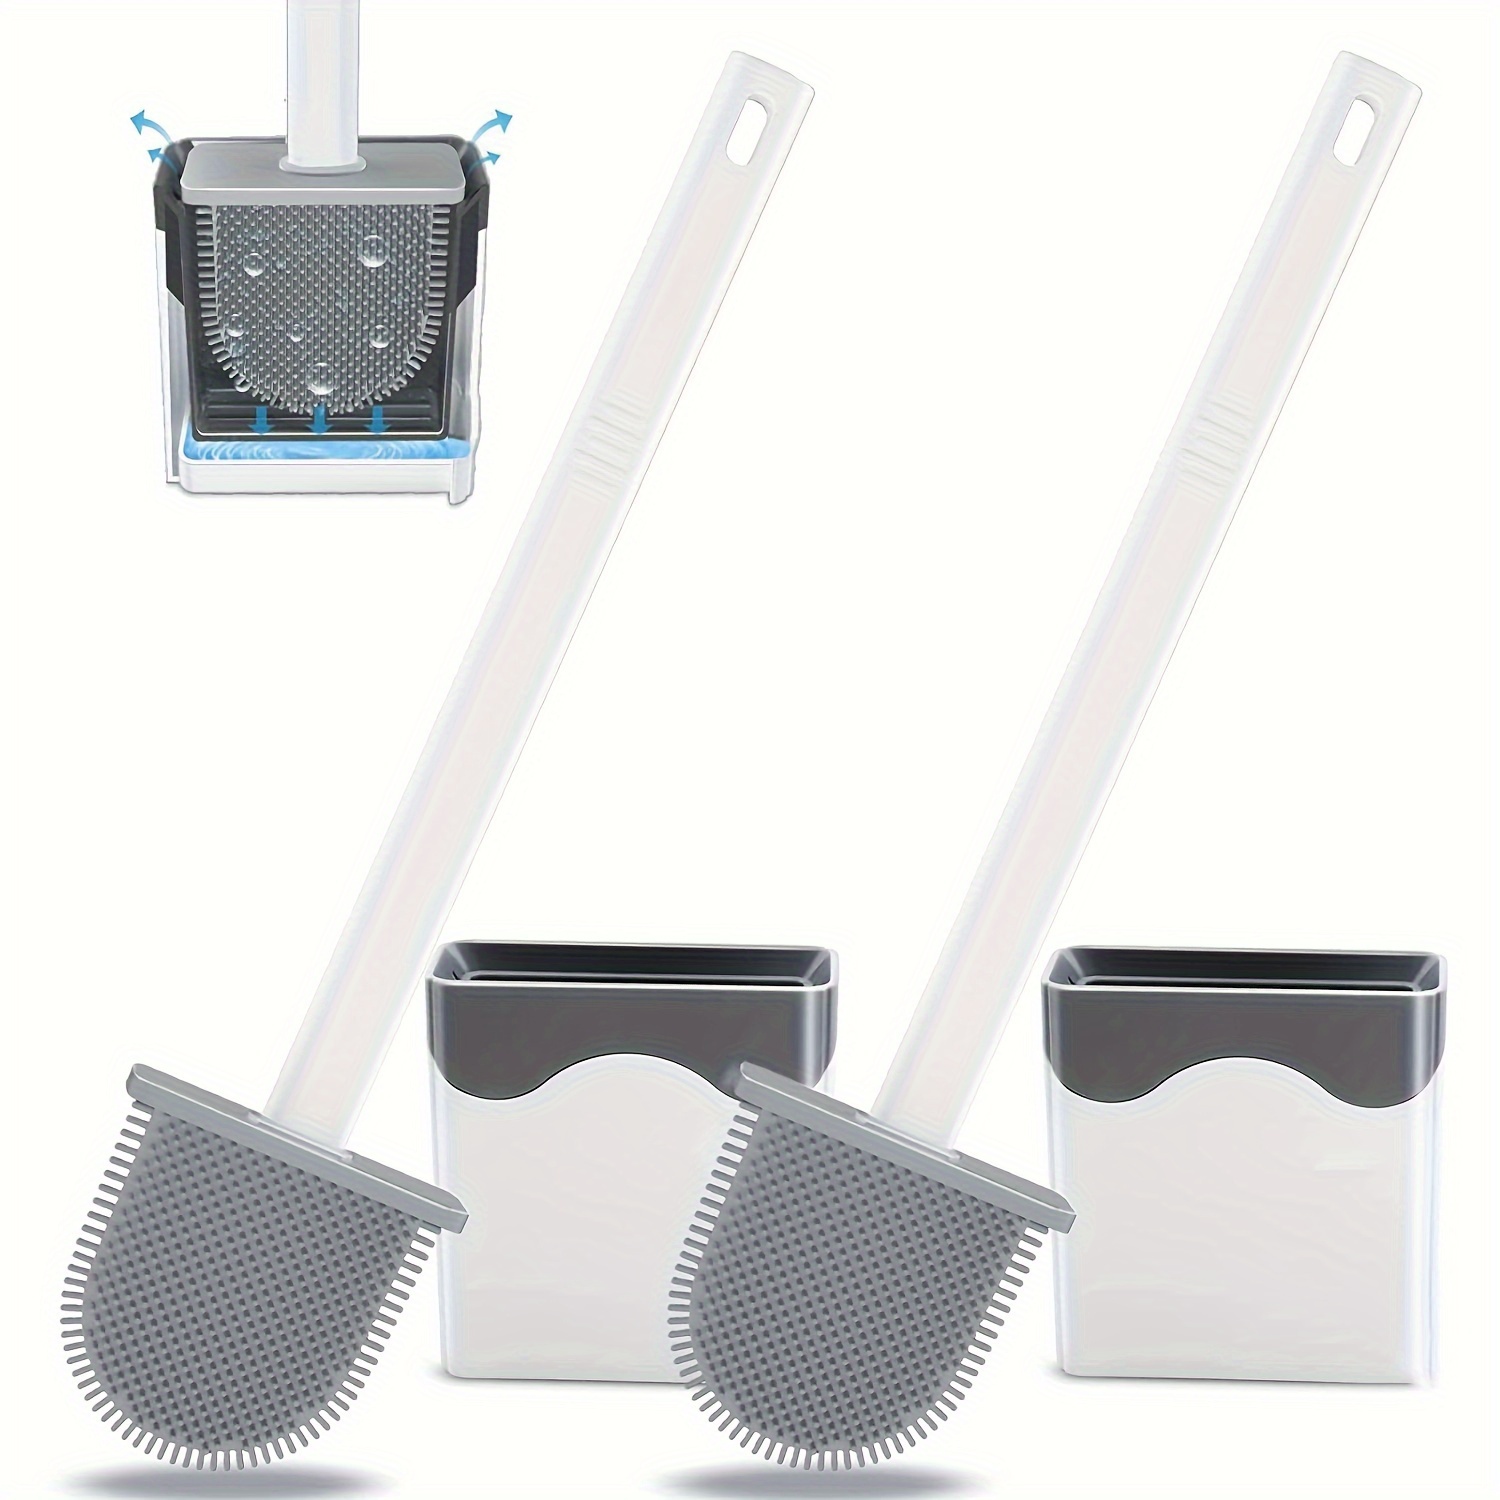 Brosse WC Silicone Plate- Brosse Toilette et Supports, Anti-Goutte